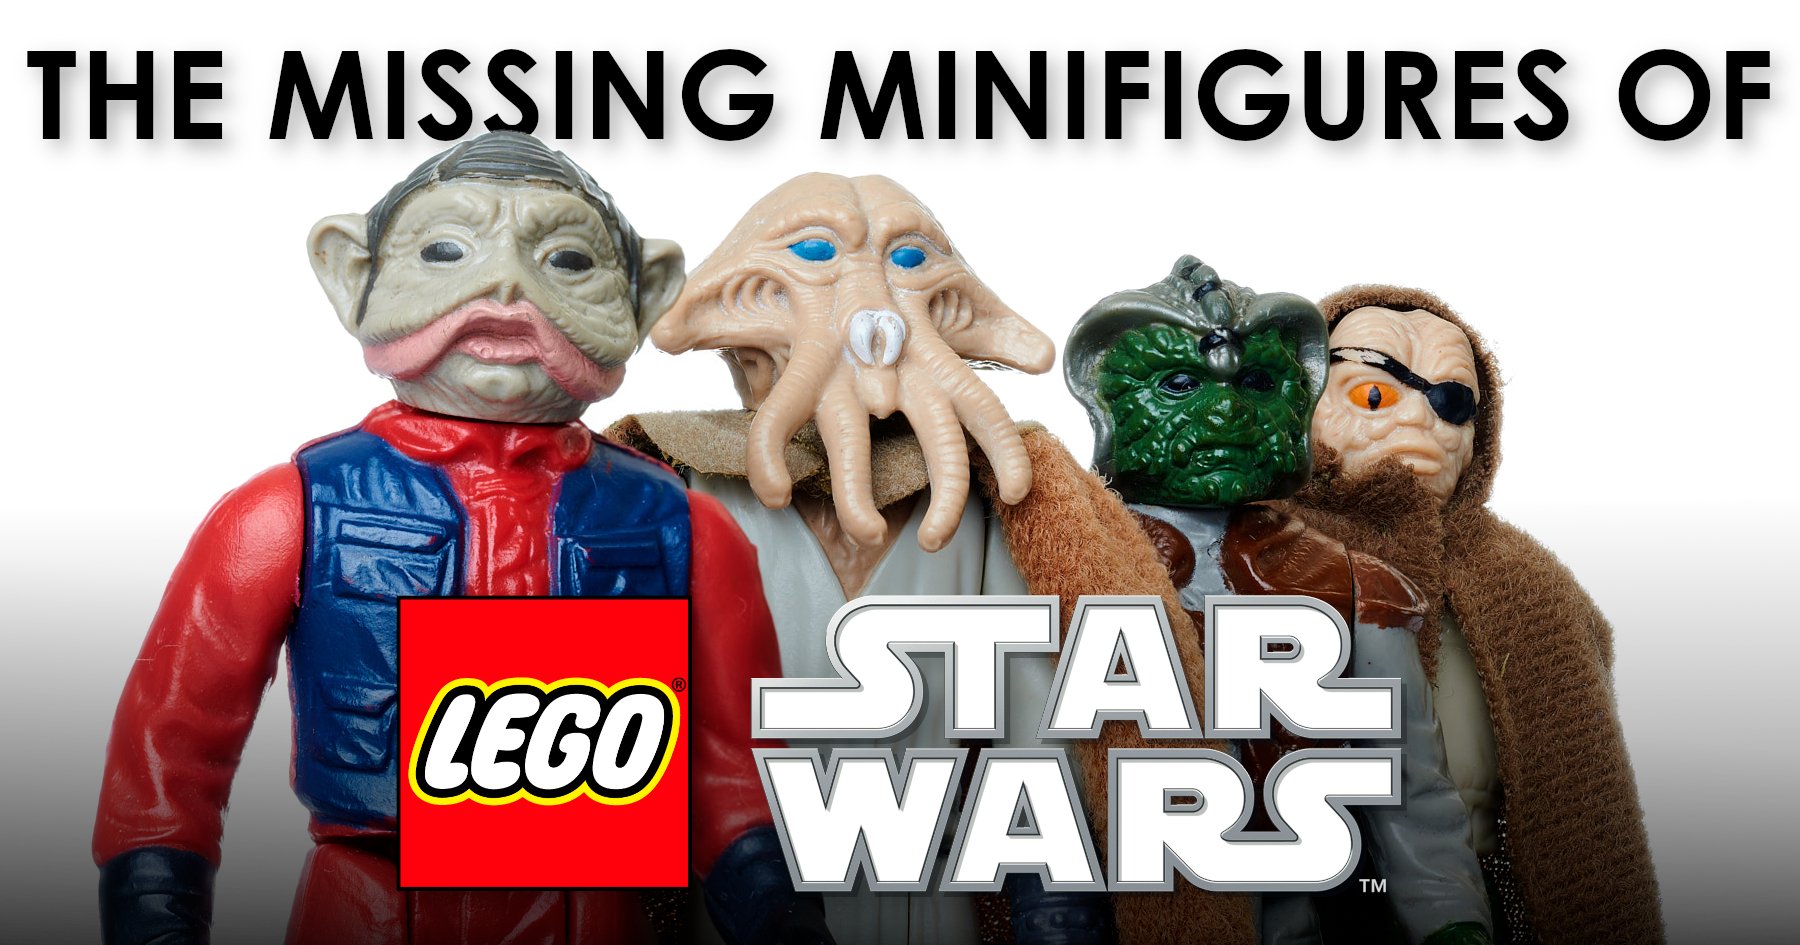 LEGO LEGO MOVIE SERIES 1 & 2 MINIFIGURE - OH CHOICE MINIFIGURE - CHOOSE -  NEW